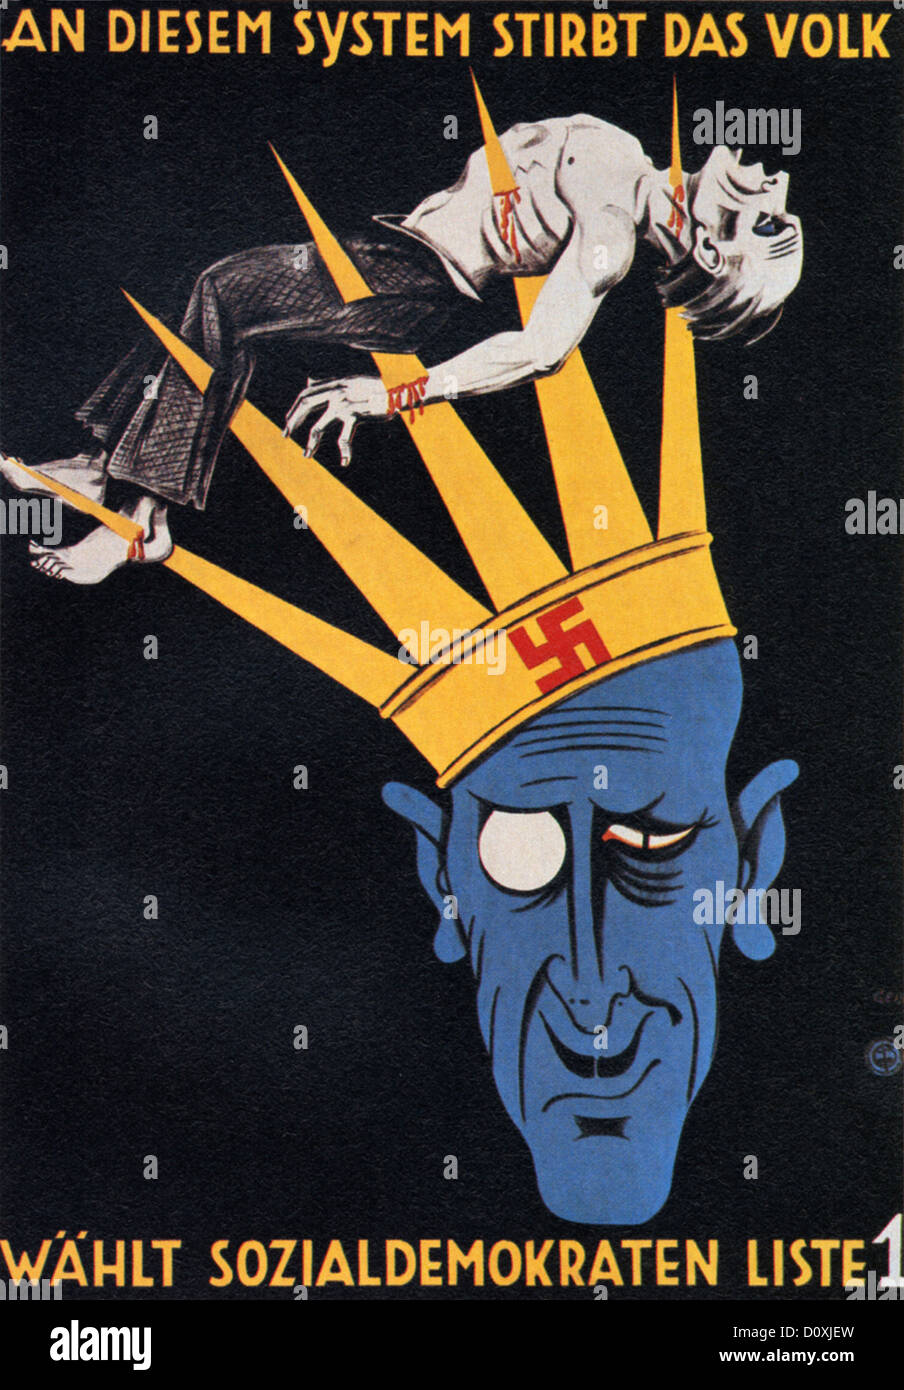 Social Democratic Party -, SPD, Social Democrats, Anti, Hitler, poster, Weimar Republic, Munich, Germany, 1932, SS, danger, warn Stock Photo